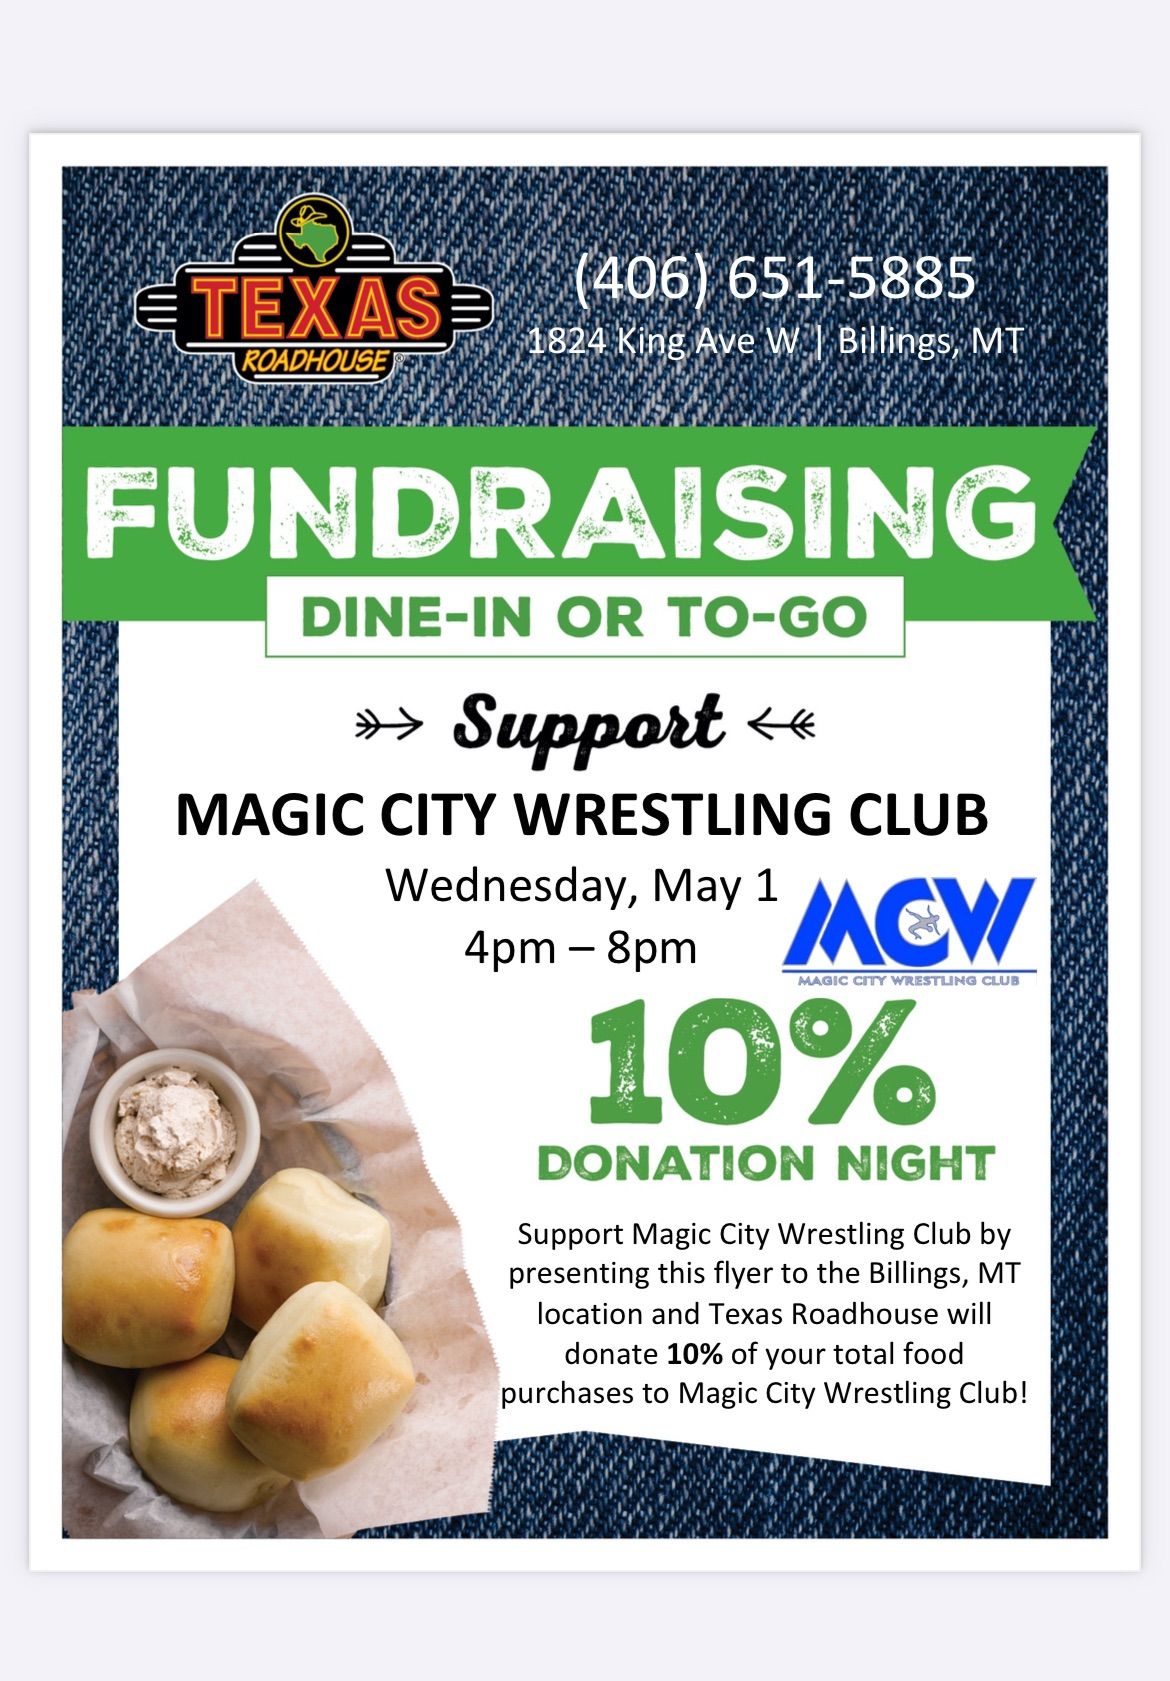 Magic City Wrestling Club Texas Roadhouse dine in fundraiser 